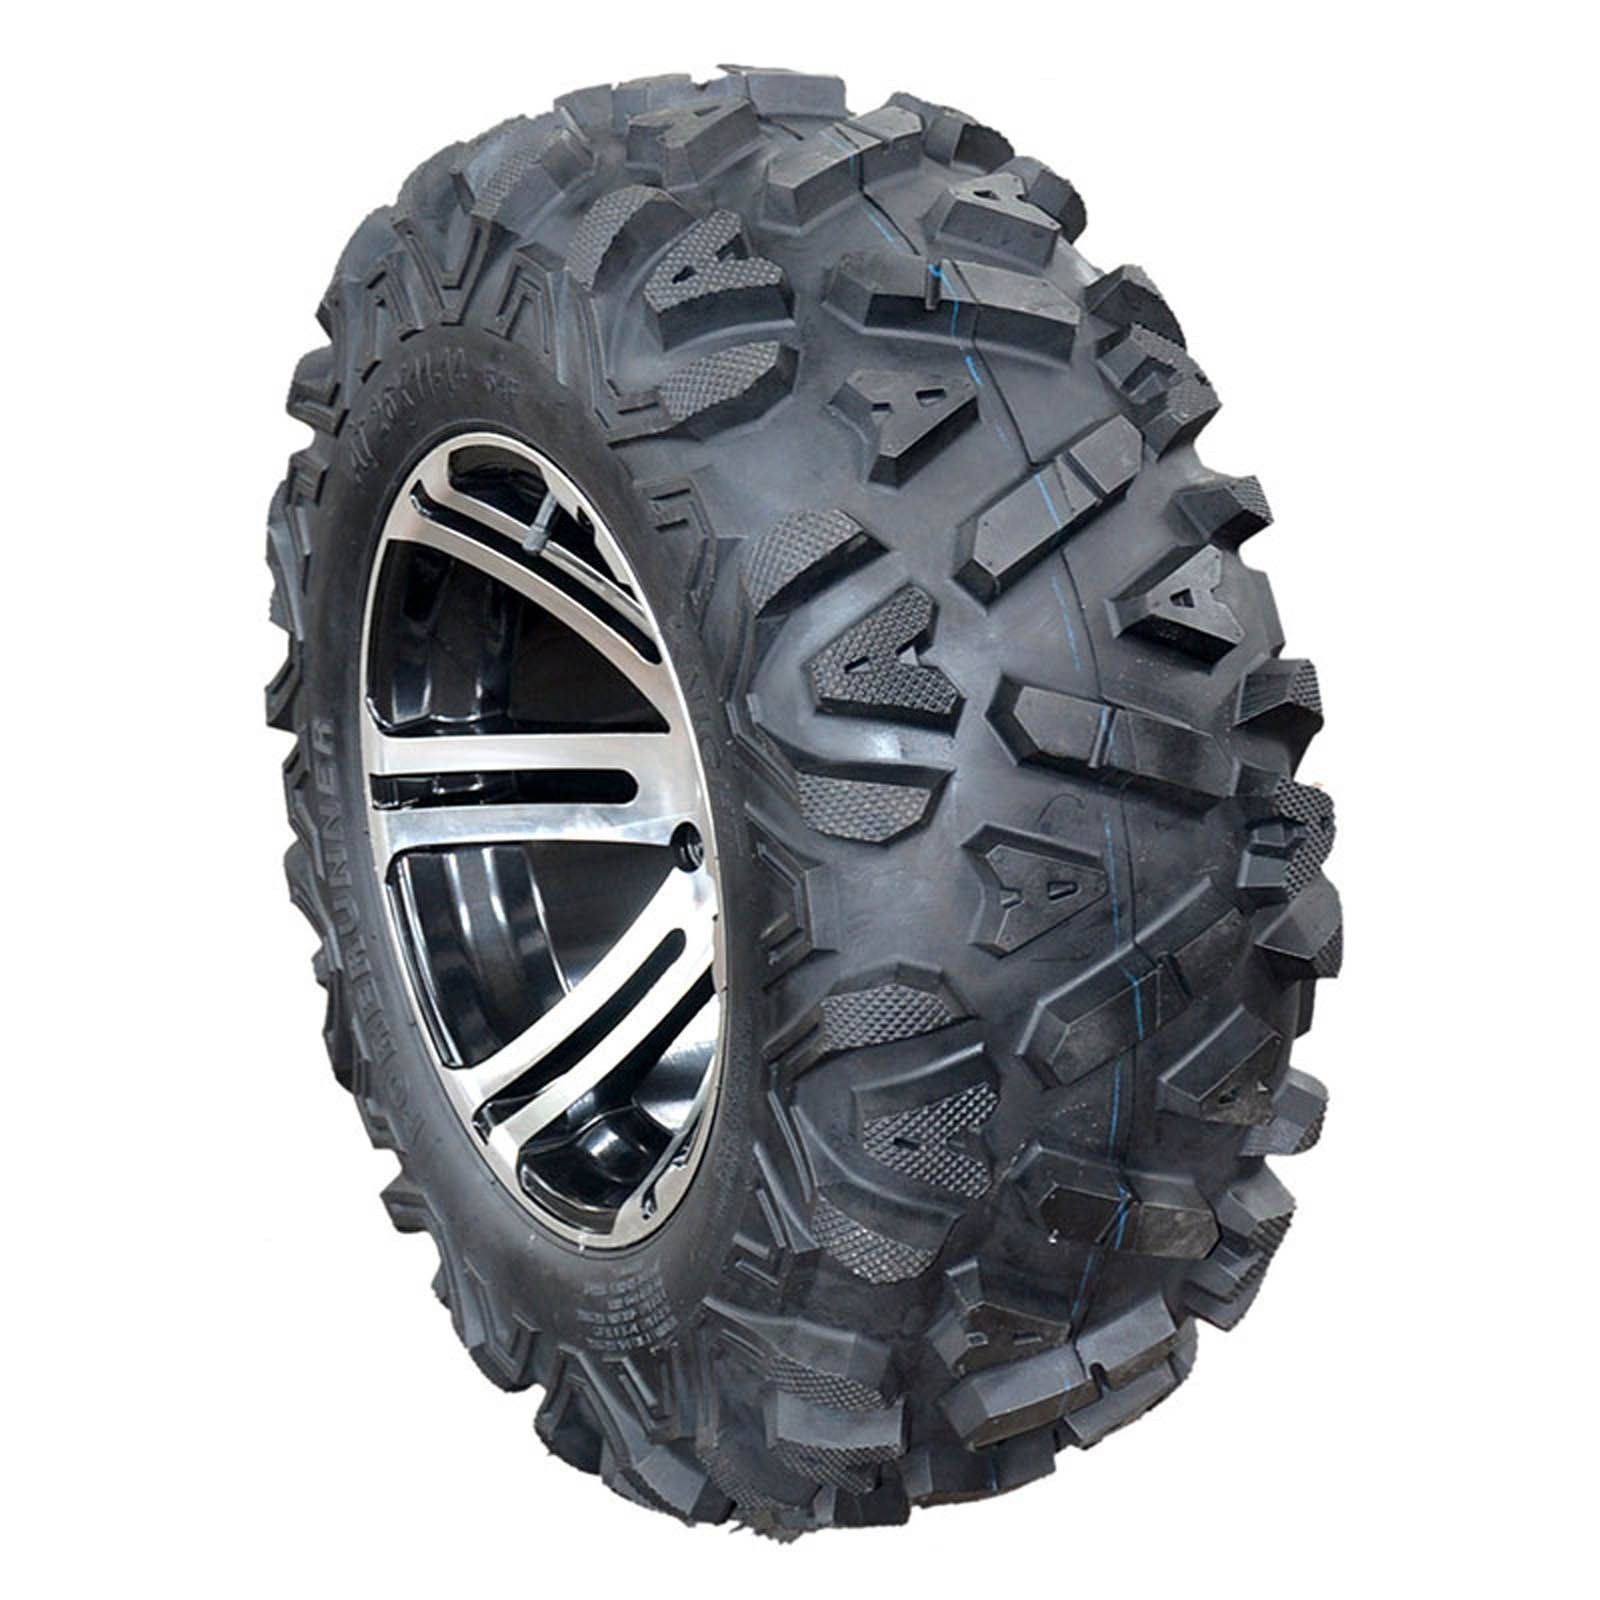 New FOREUNNER ATV Tyre Knight - 26 x 9 x 12 (6PR) #12X26X9KNIGHT